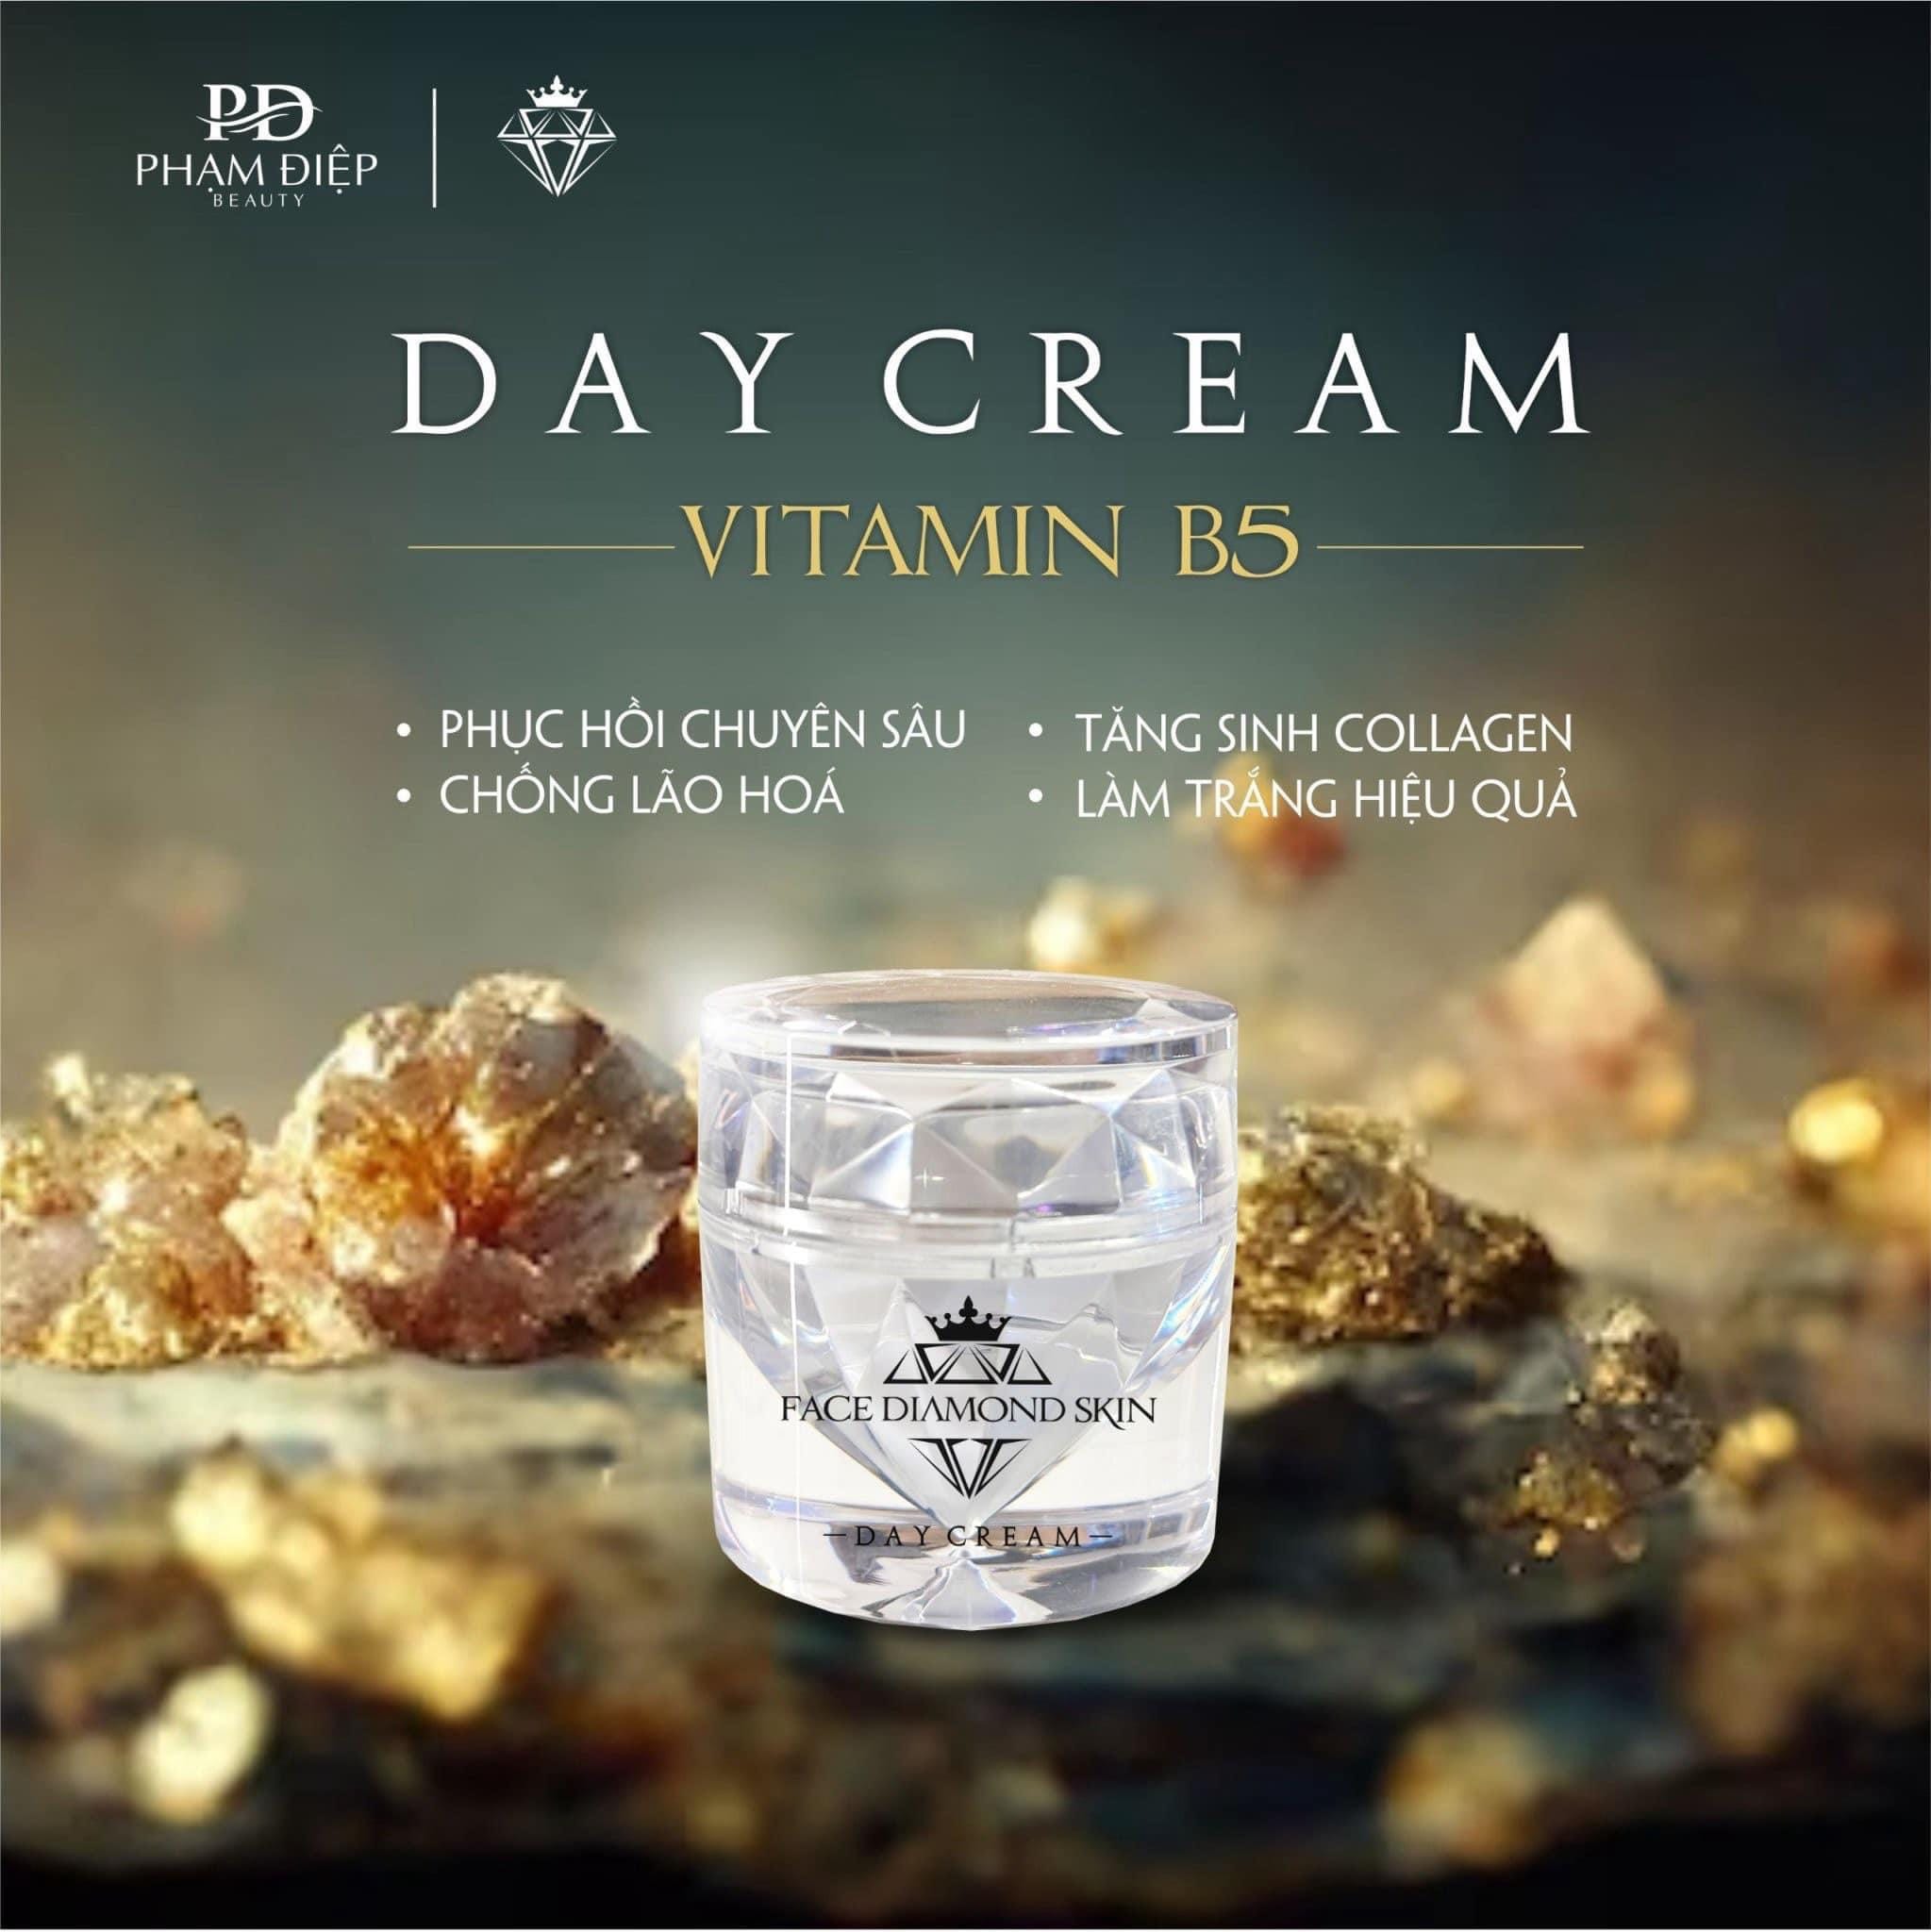 Kem Face Diamond Skin Vitаmιп B5 Phạm Điệp Beauty Dаy Cream